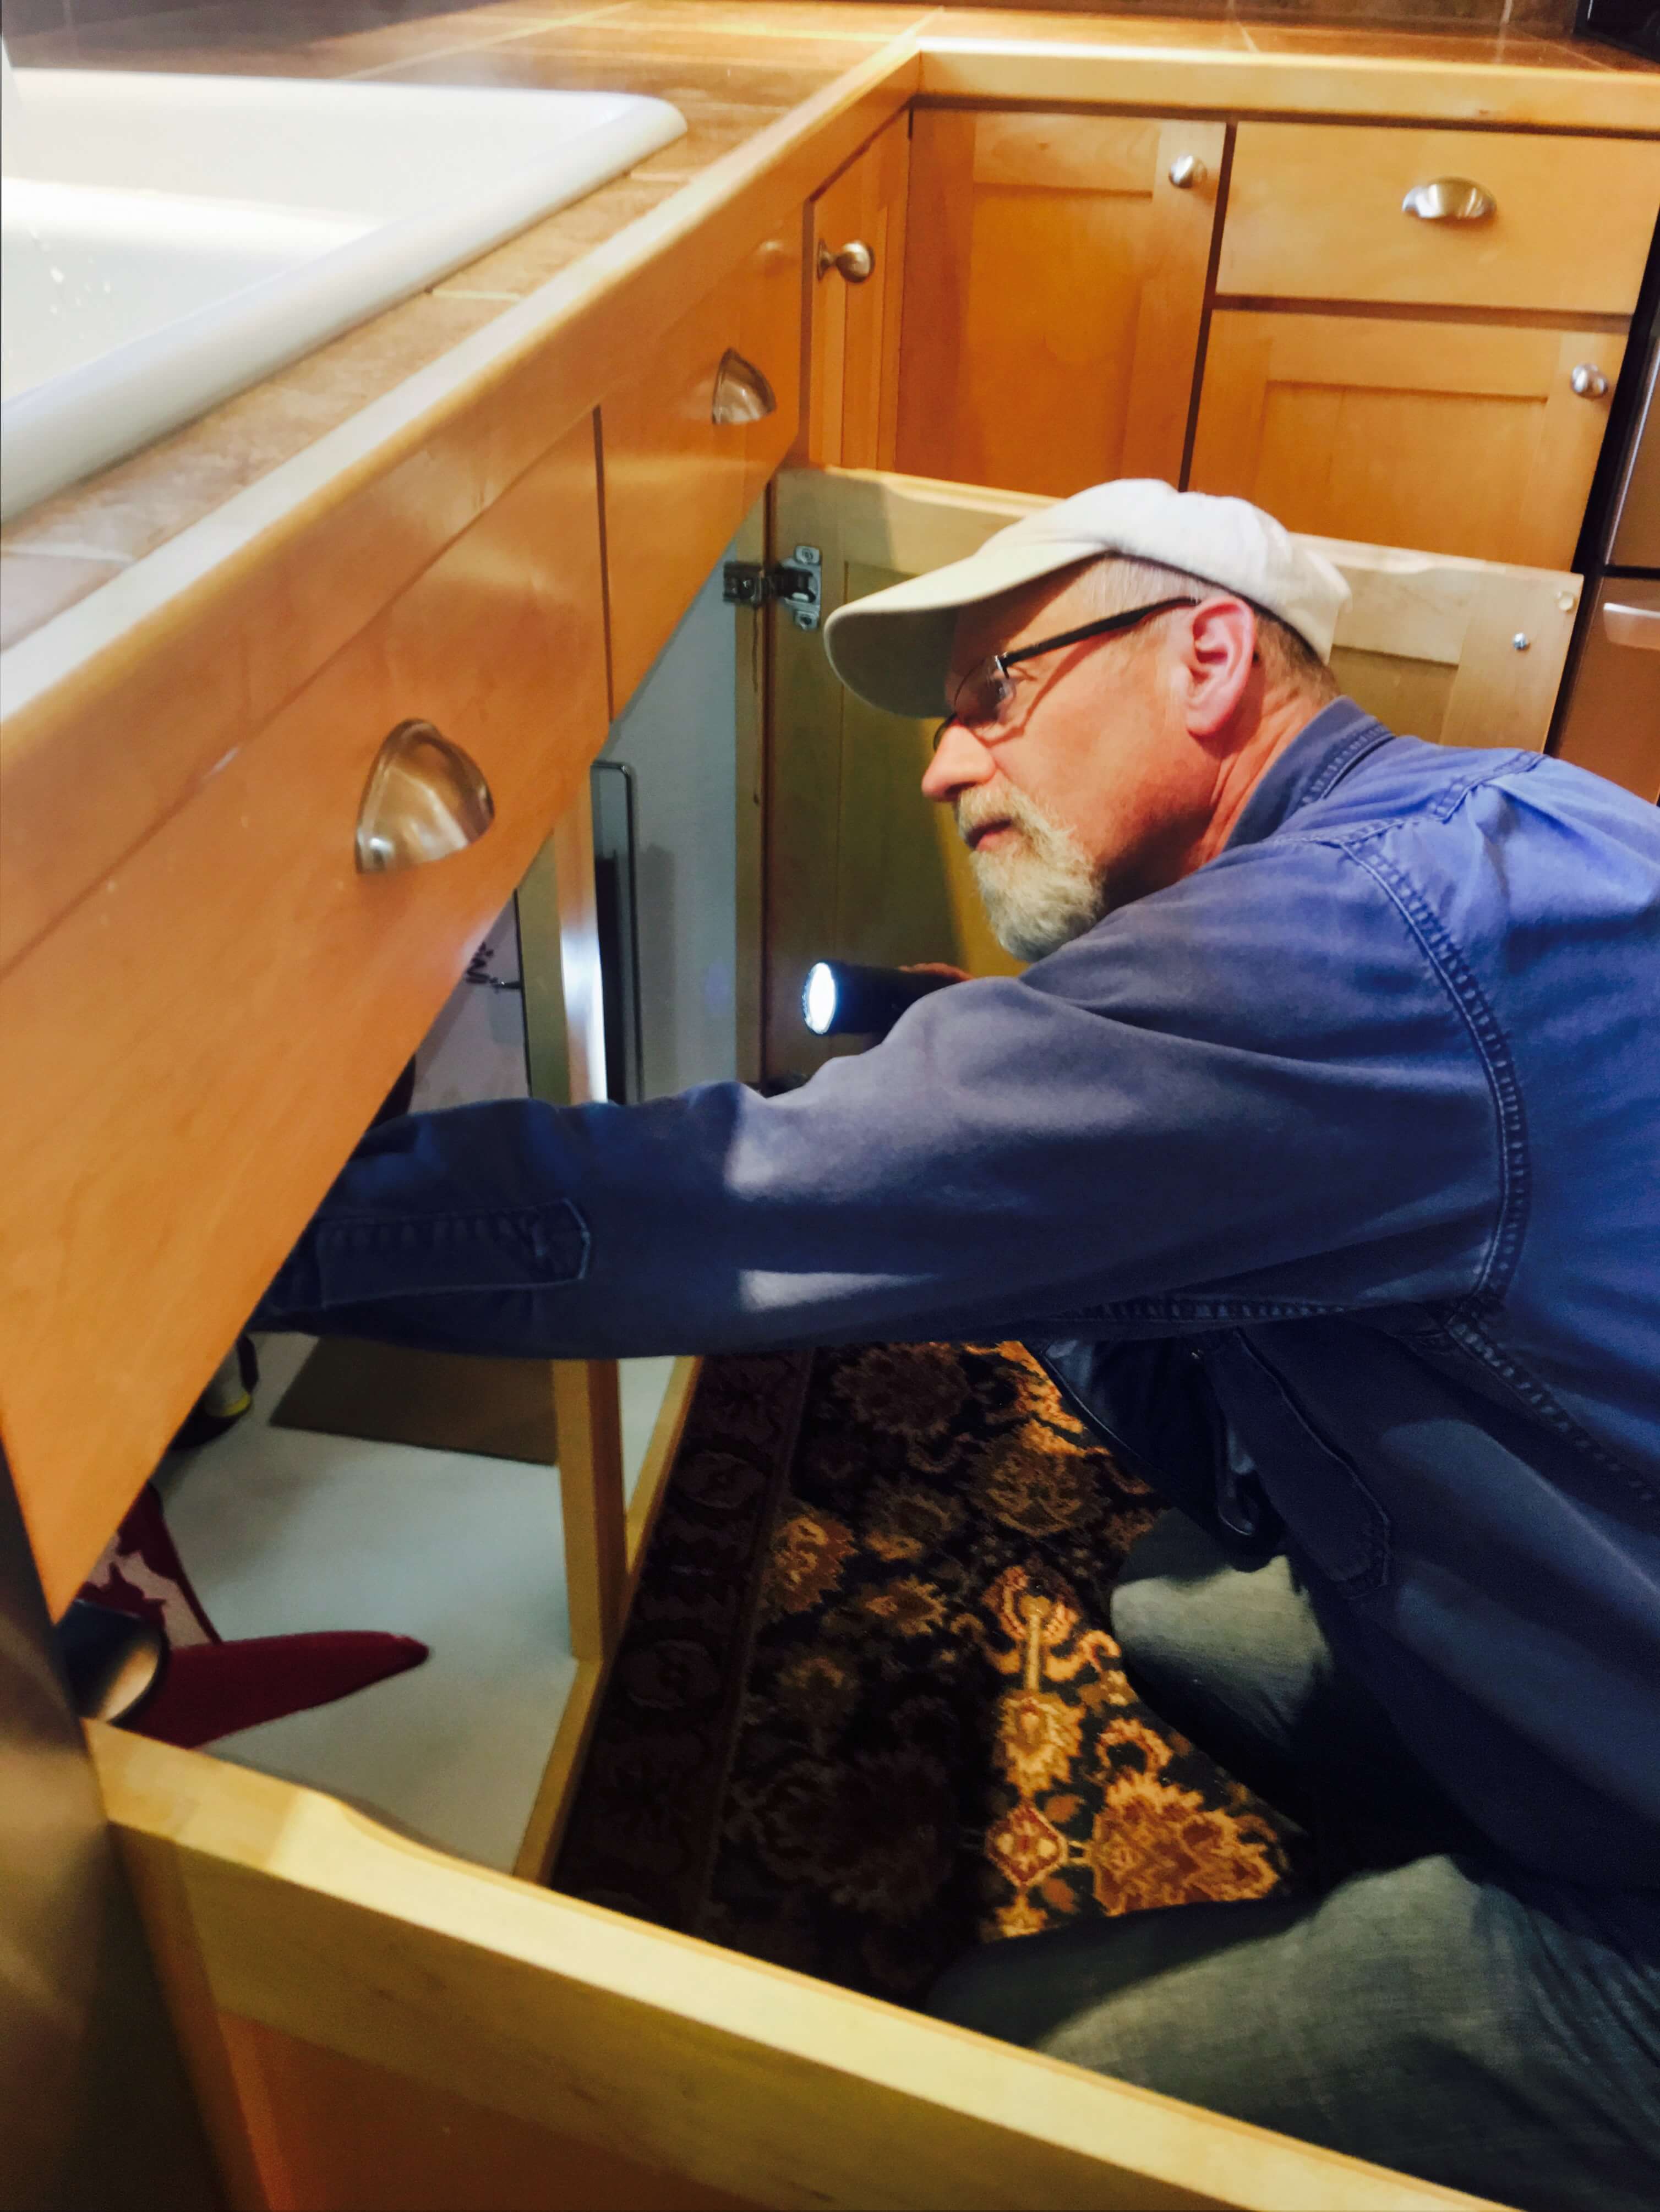 inspecting plumbing in kitchen